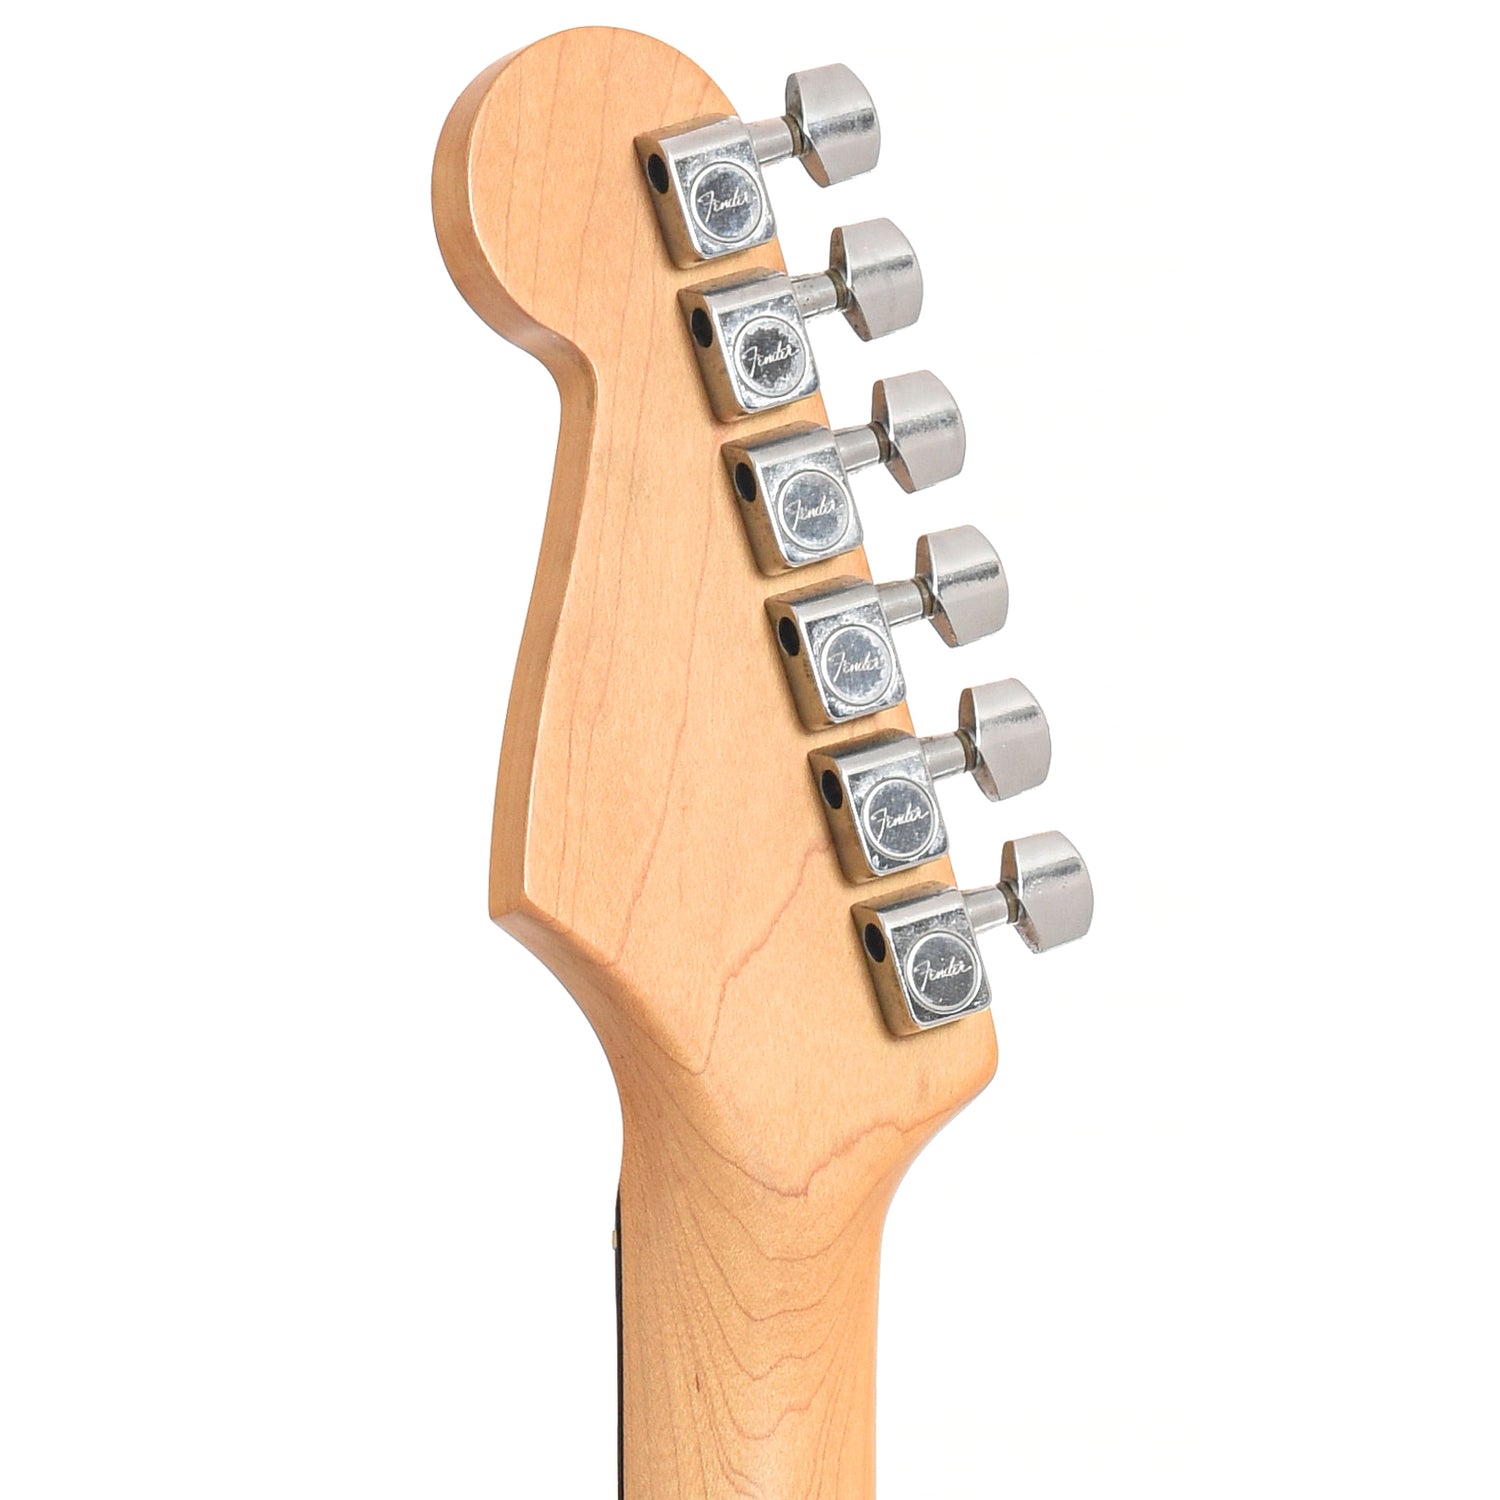 Back headstock of Fender American Standard Stratocaster